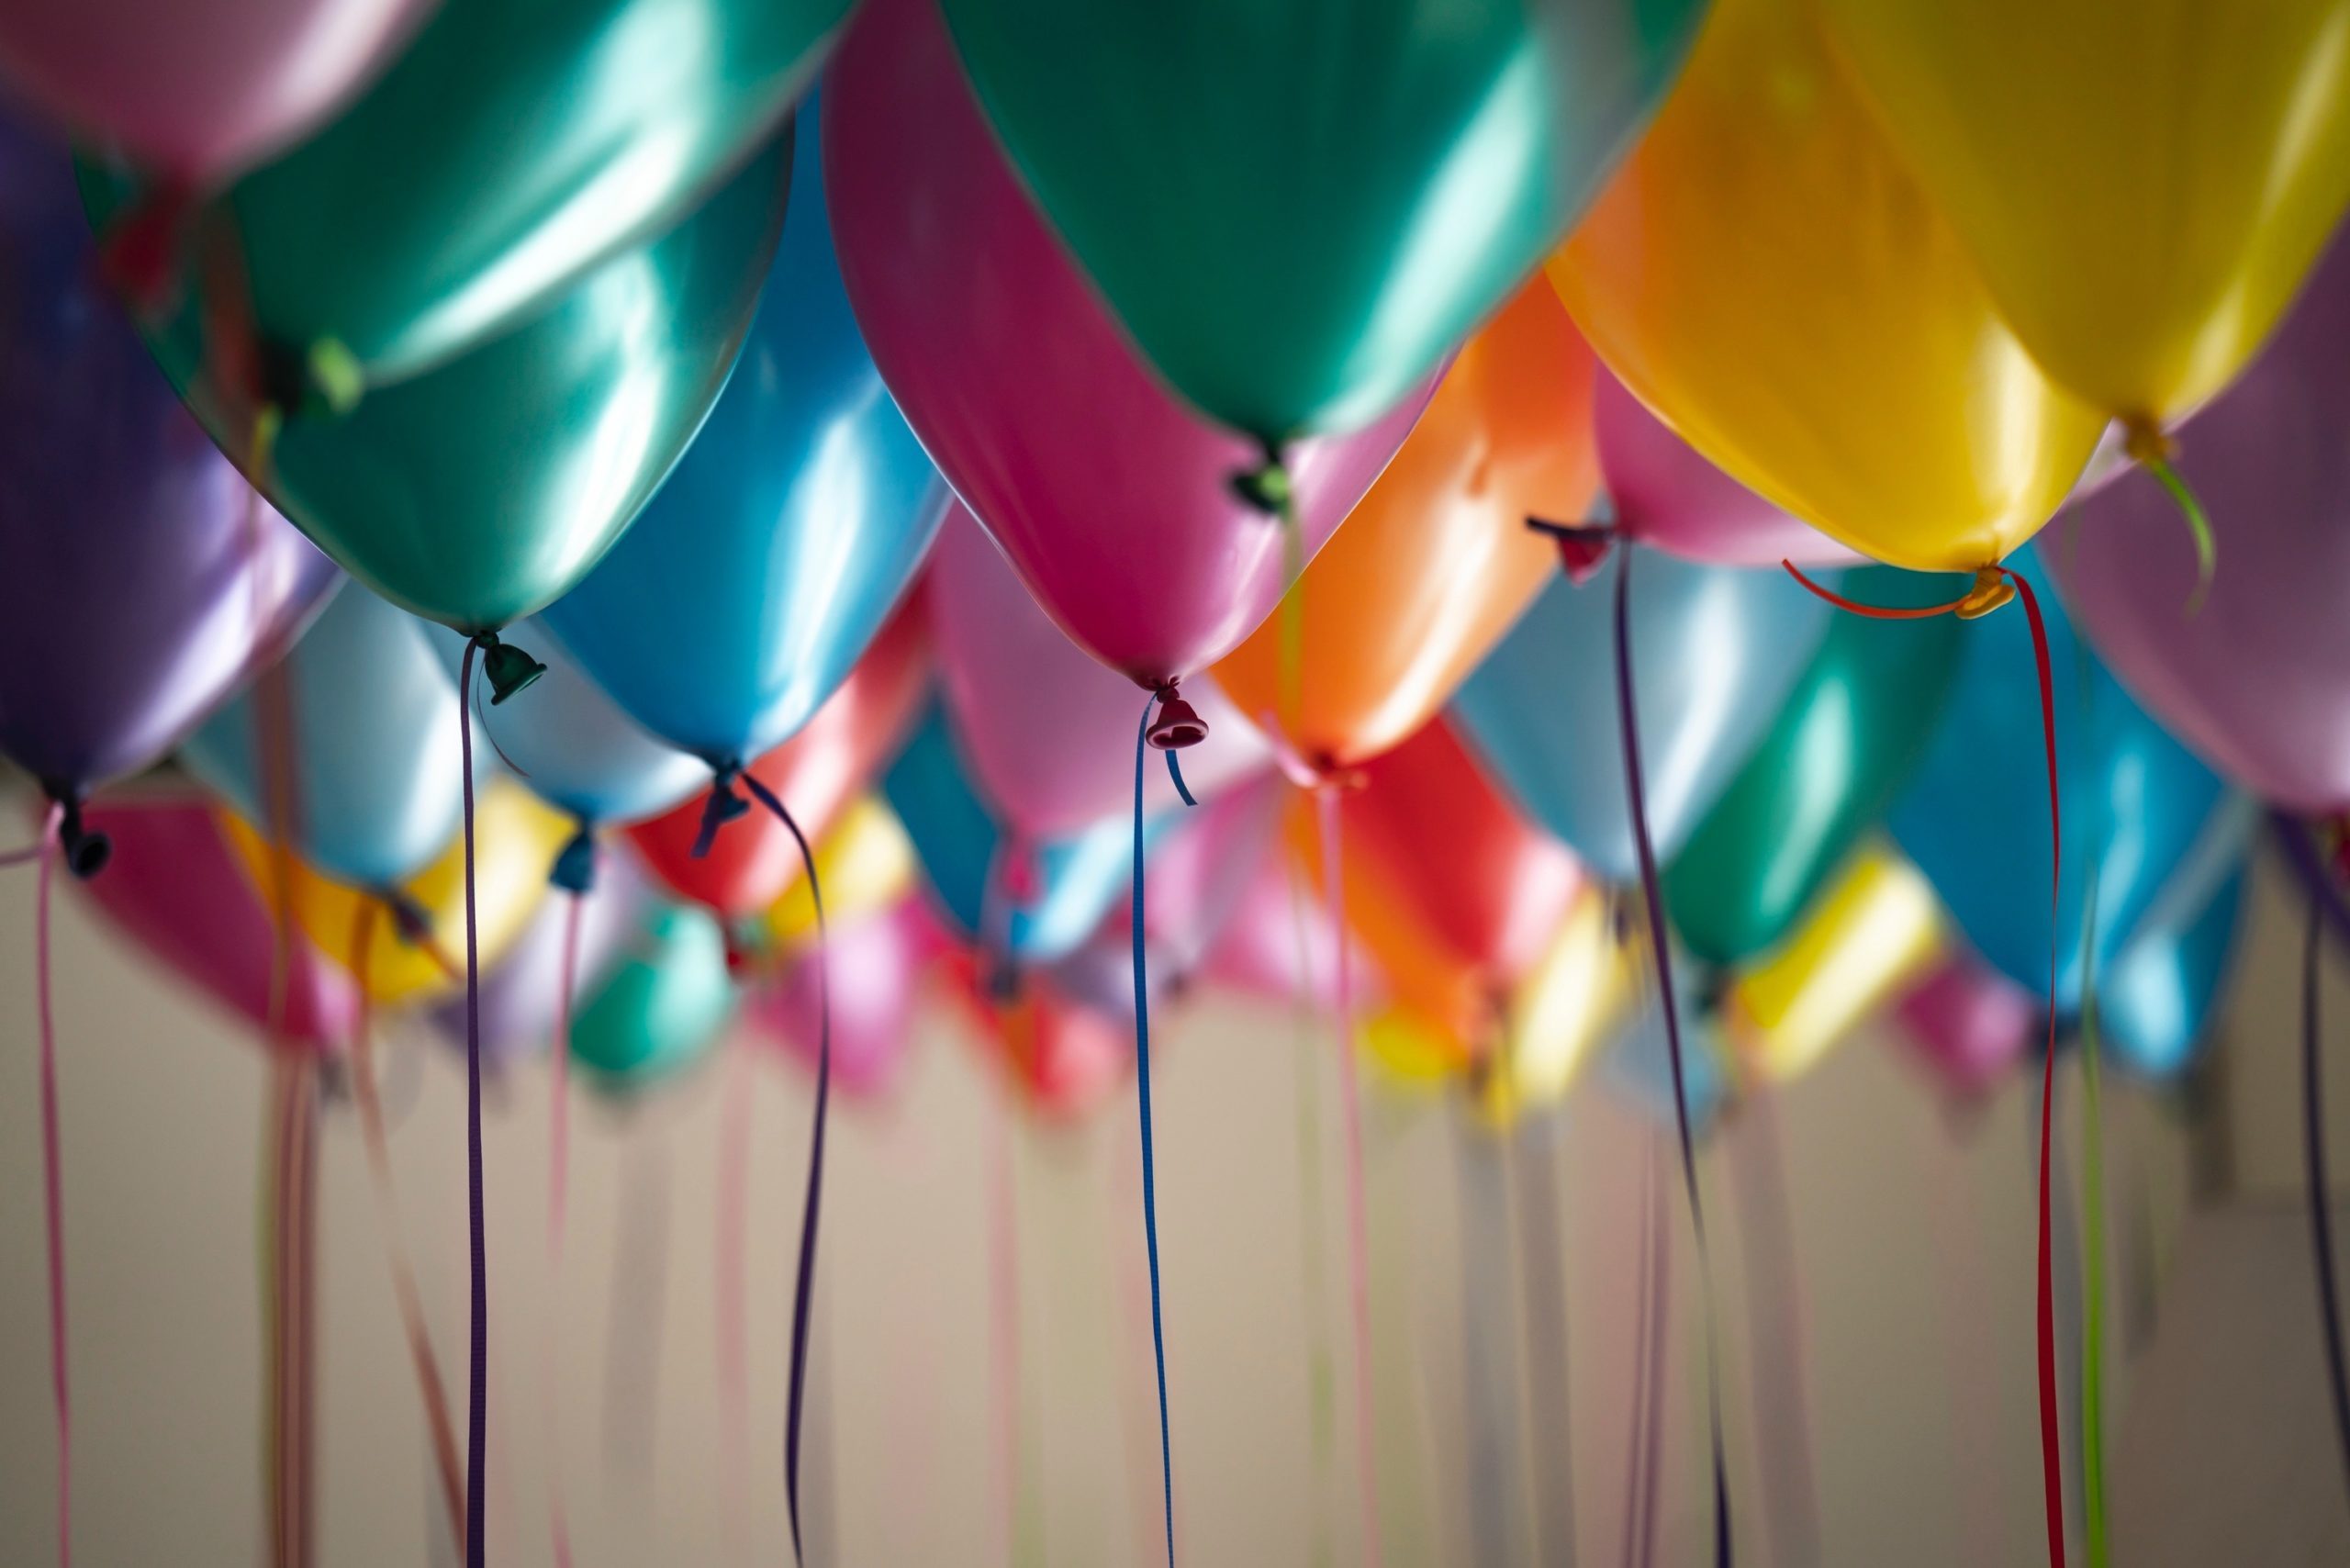 happy birthday balloons images